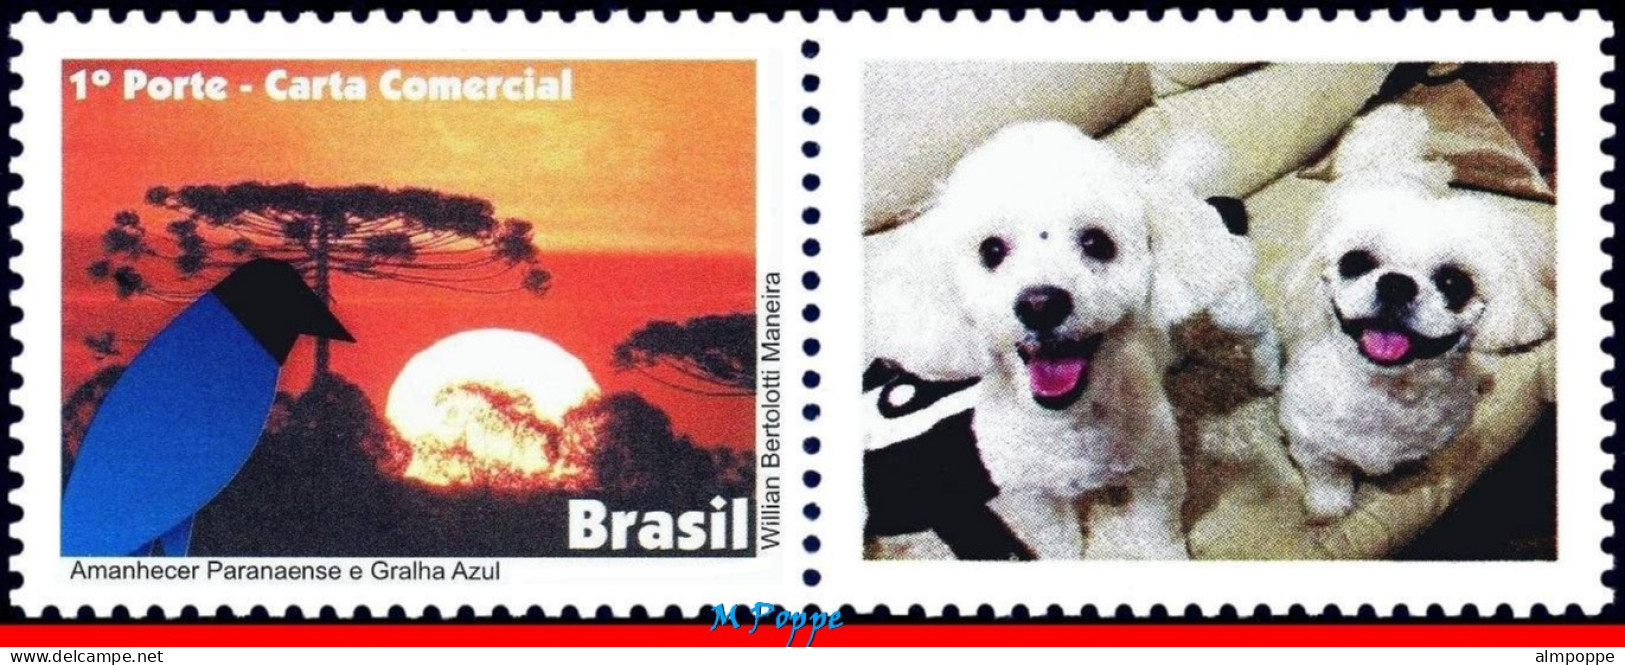 Ref. BR-3203-3FO BRAZIL 2011 - DAWN PARANA, BLUE JACKDAW,BIRDS,DOGS,SHEET PERSONALIZED MNH, ANIMALS, FAUNA 12V Sc# 3203 - Sellos Personalizados